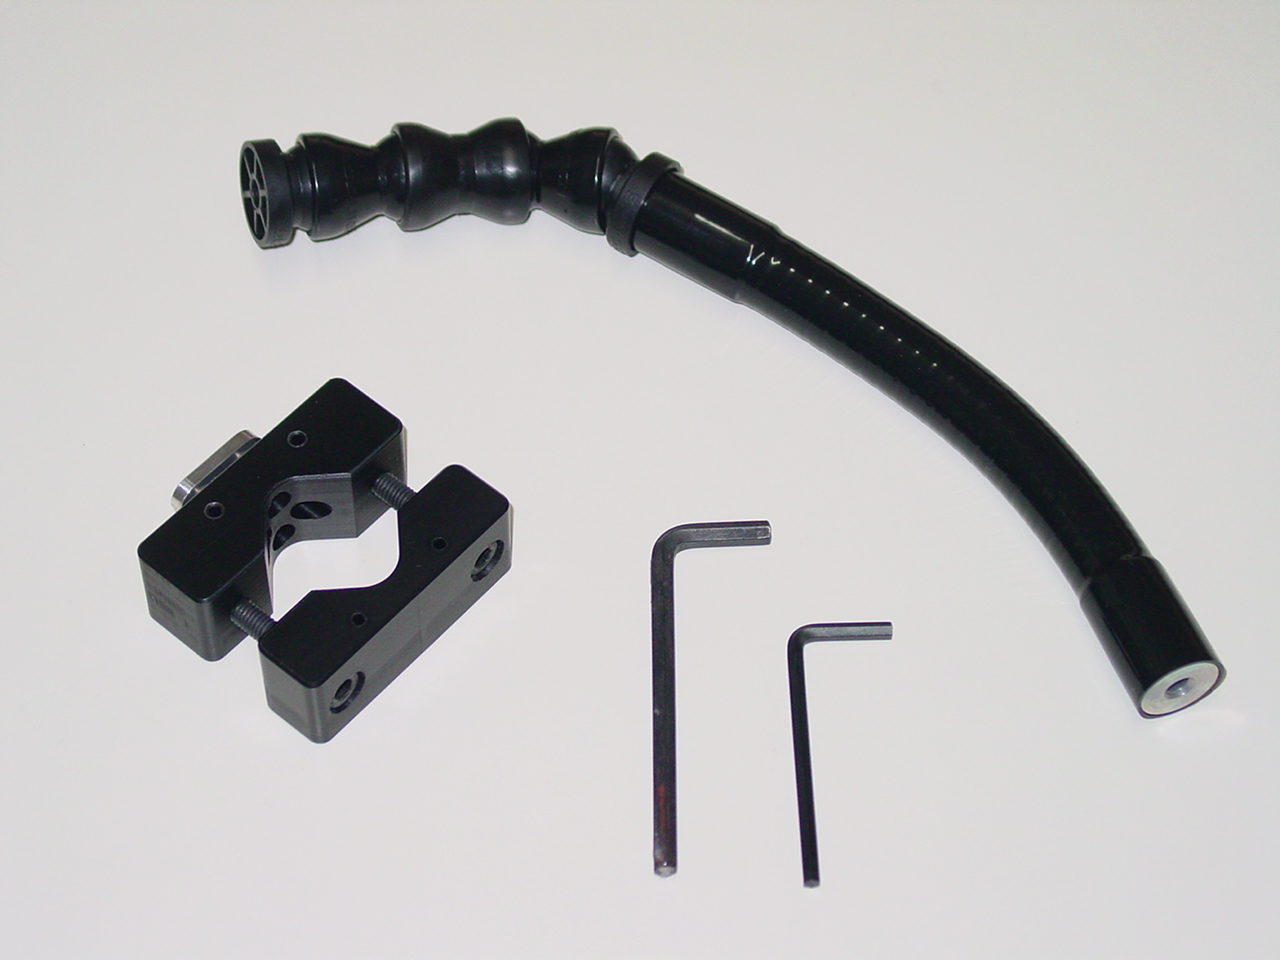 Flex Arm Mounting System with 6-Inch Flex Arm for UniTrack